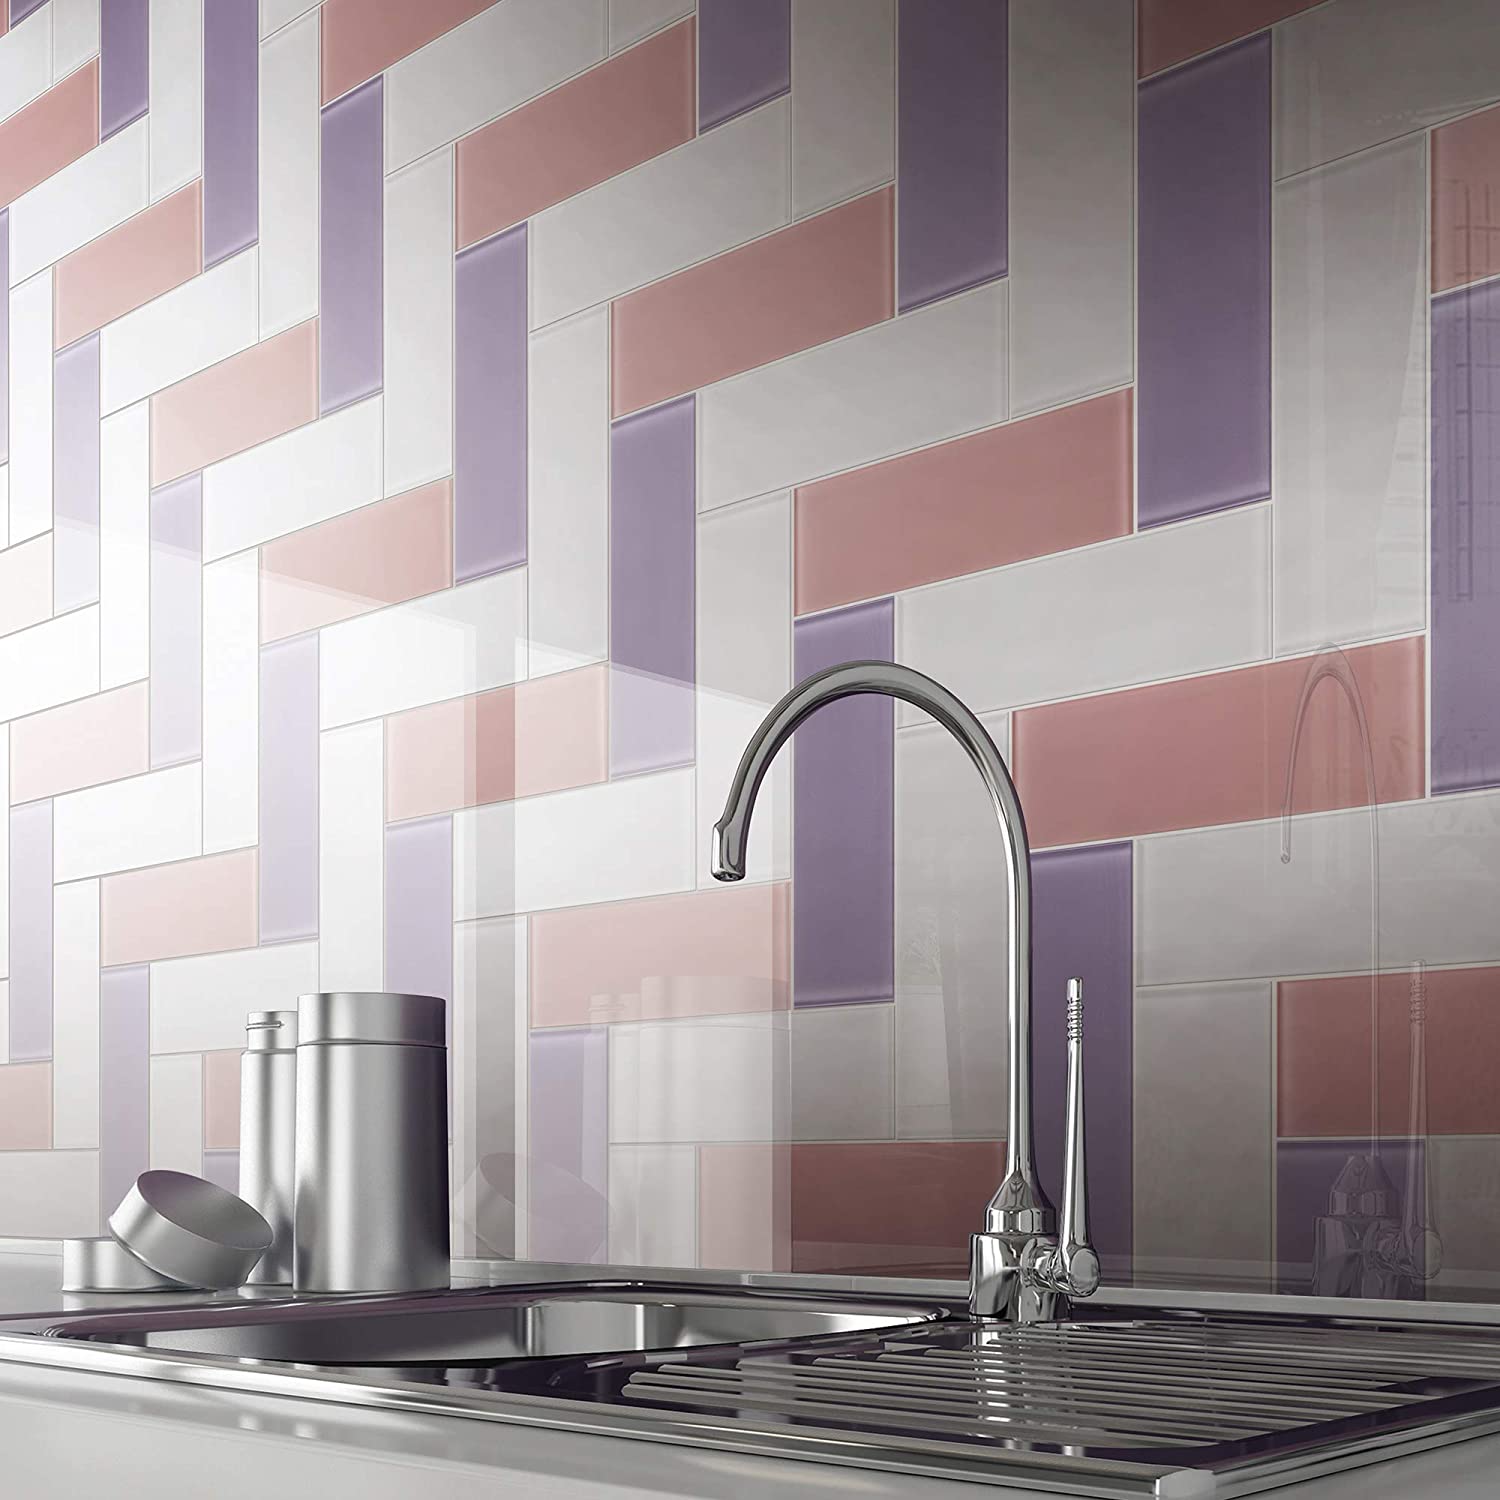 4x12 Glossy White Subway Glass Mosaic Tiles for Bathroom and Kitchen Walls Kitchen Backsplashes